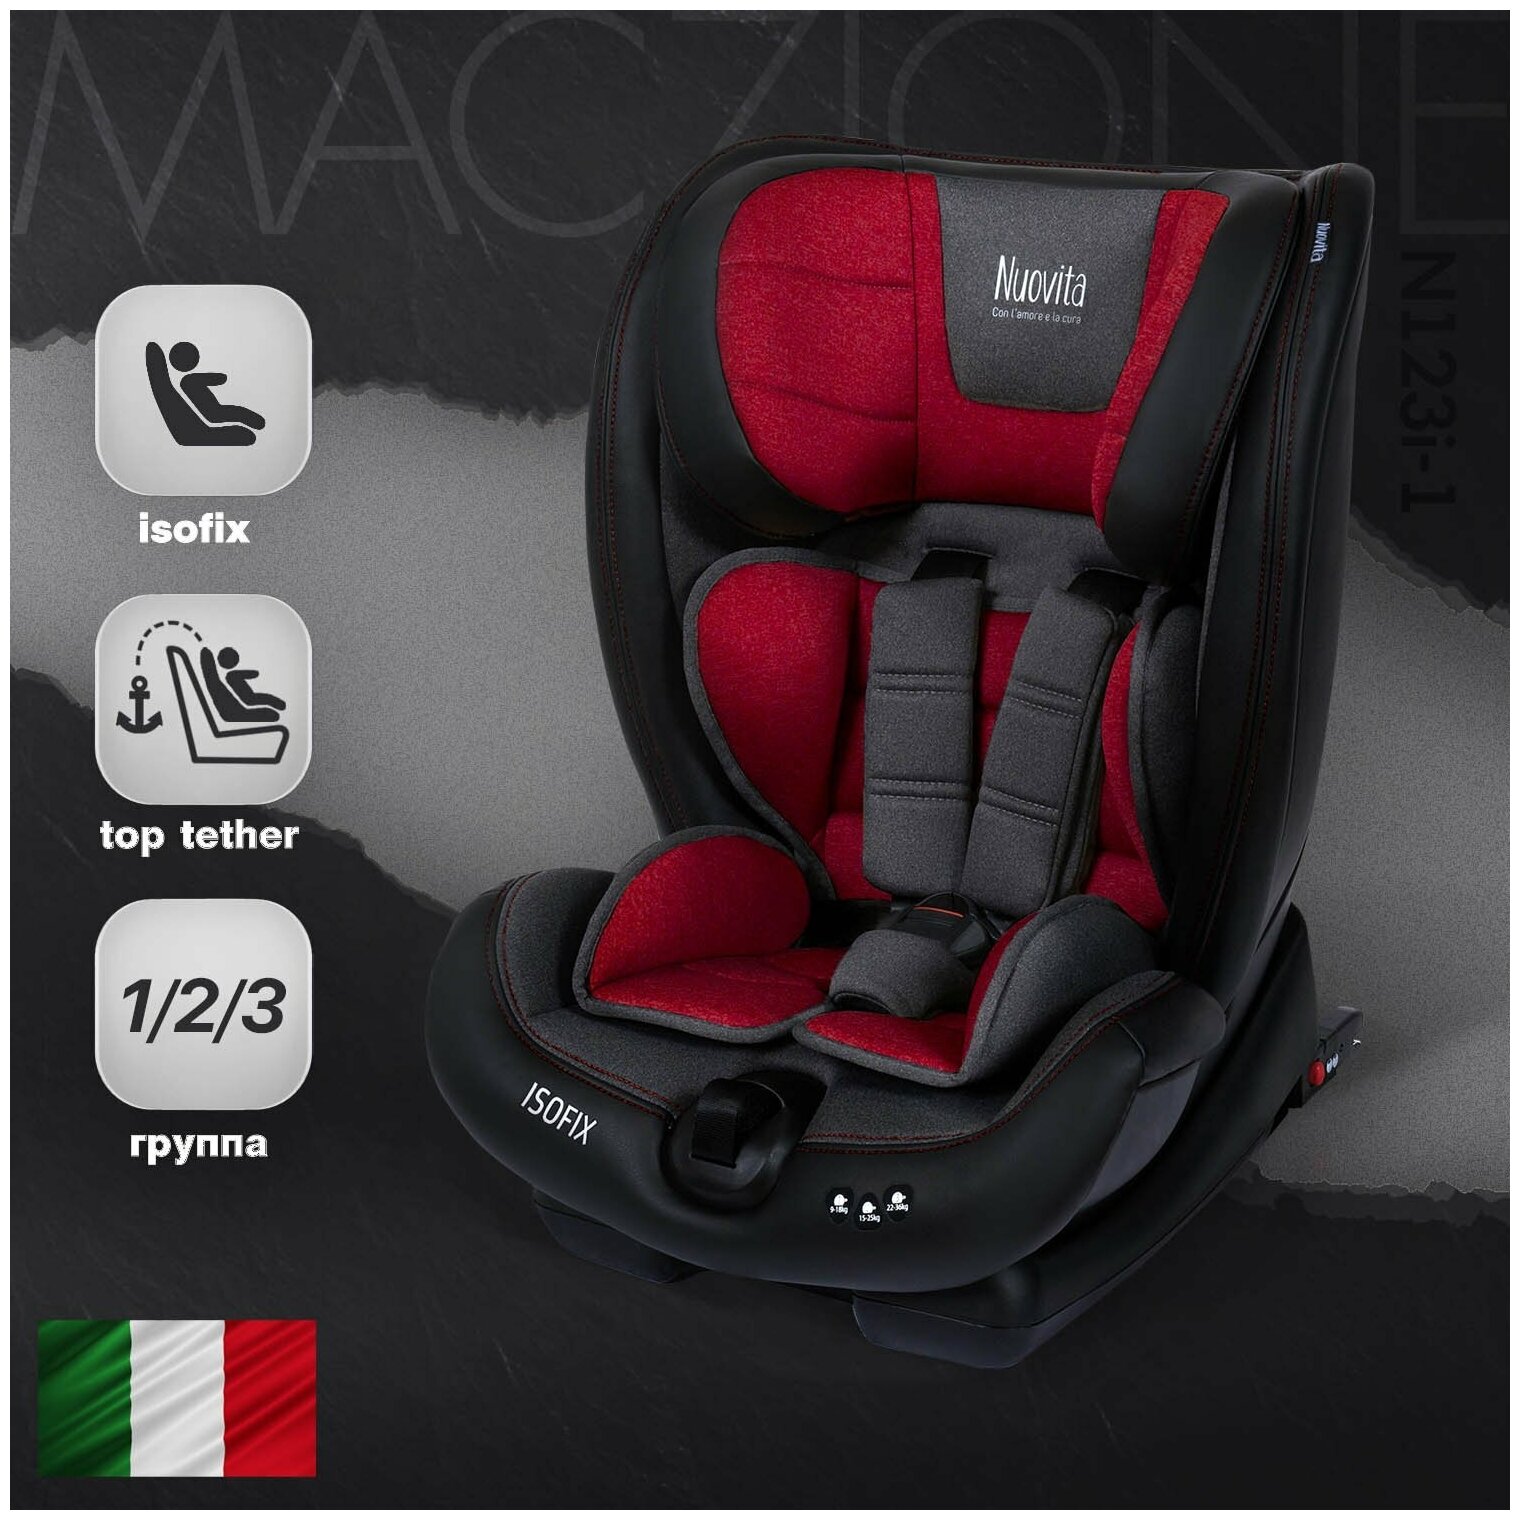 Автокресло Nuovita Maczione N123i-1